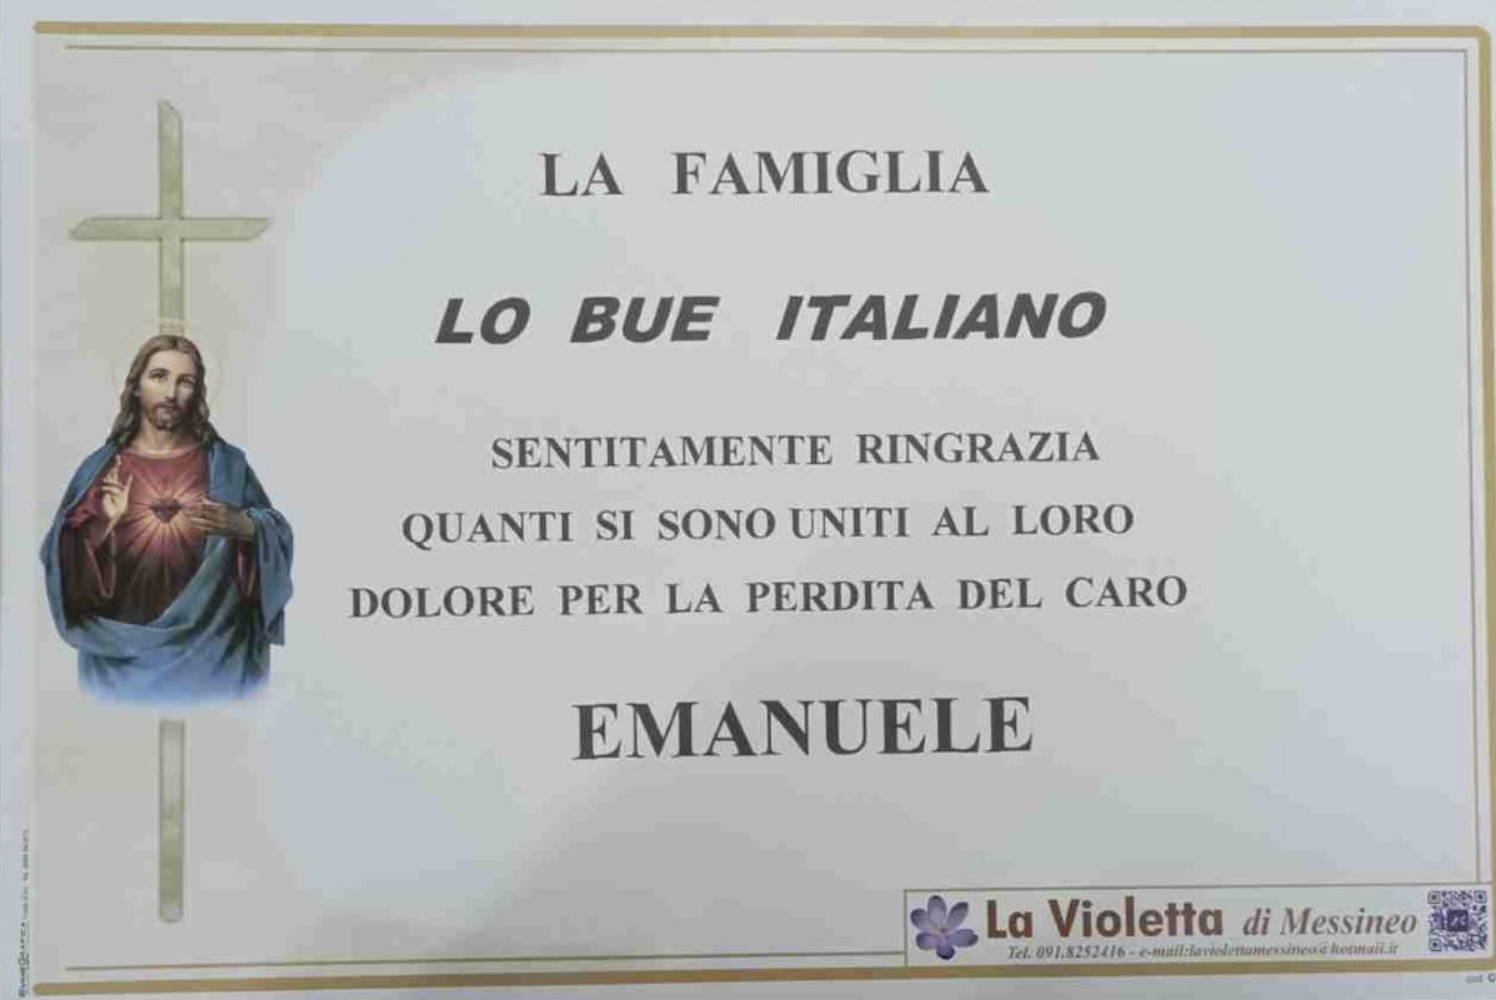 Emanuele Lo Bue